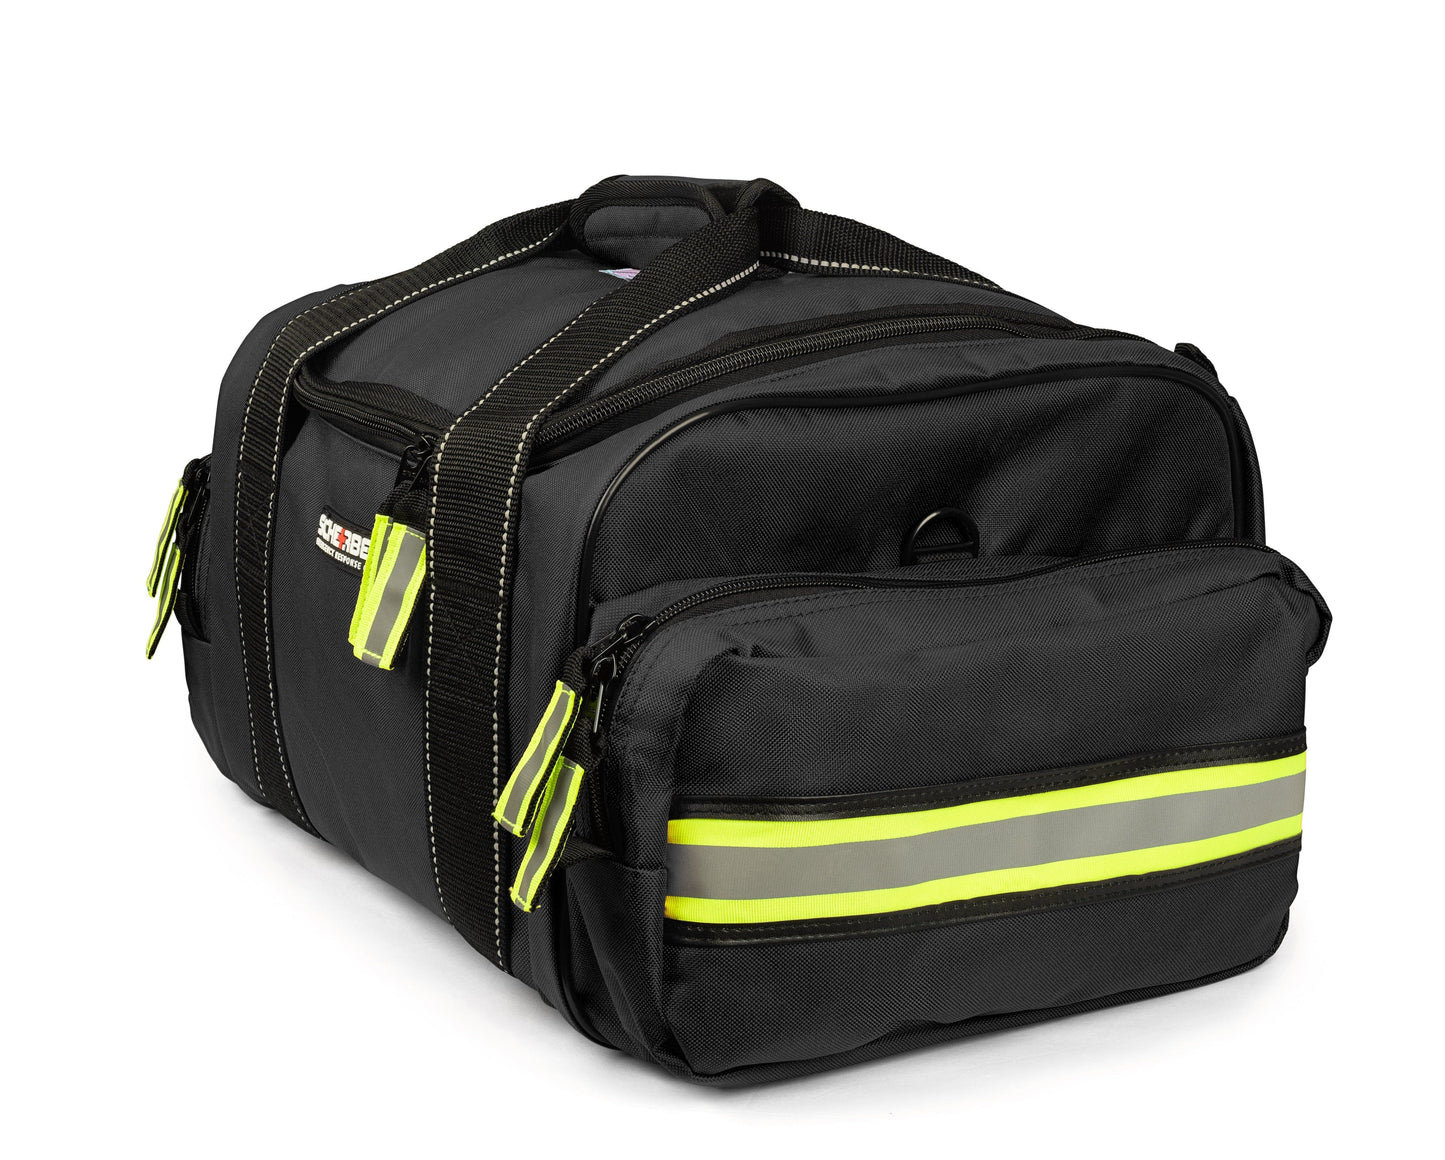 Chief Miller First Aid Kits Scherber First Responder Bag | Professional Essentials+ EMT/EMS Trauma Bag Apparel